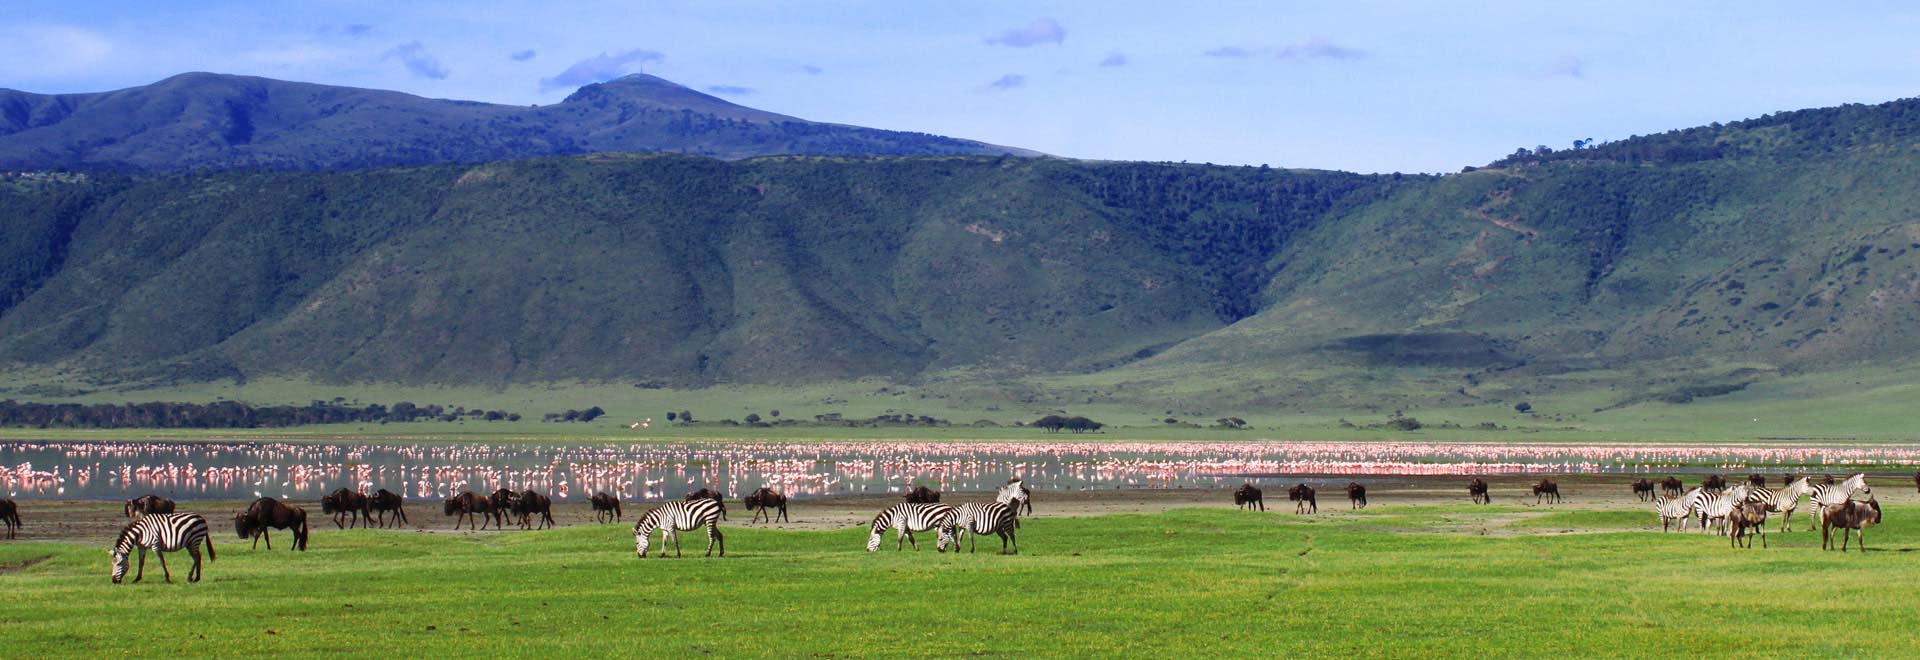 Africa-Tanzania-Ngorongoro-Crater-Zebras-and-Flamingos